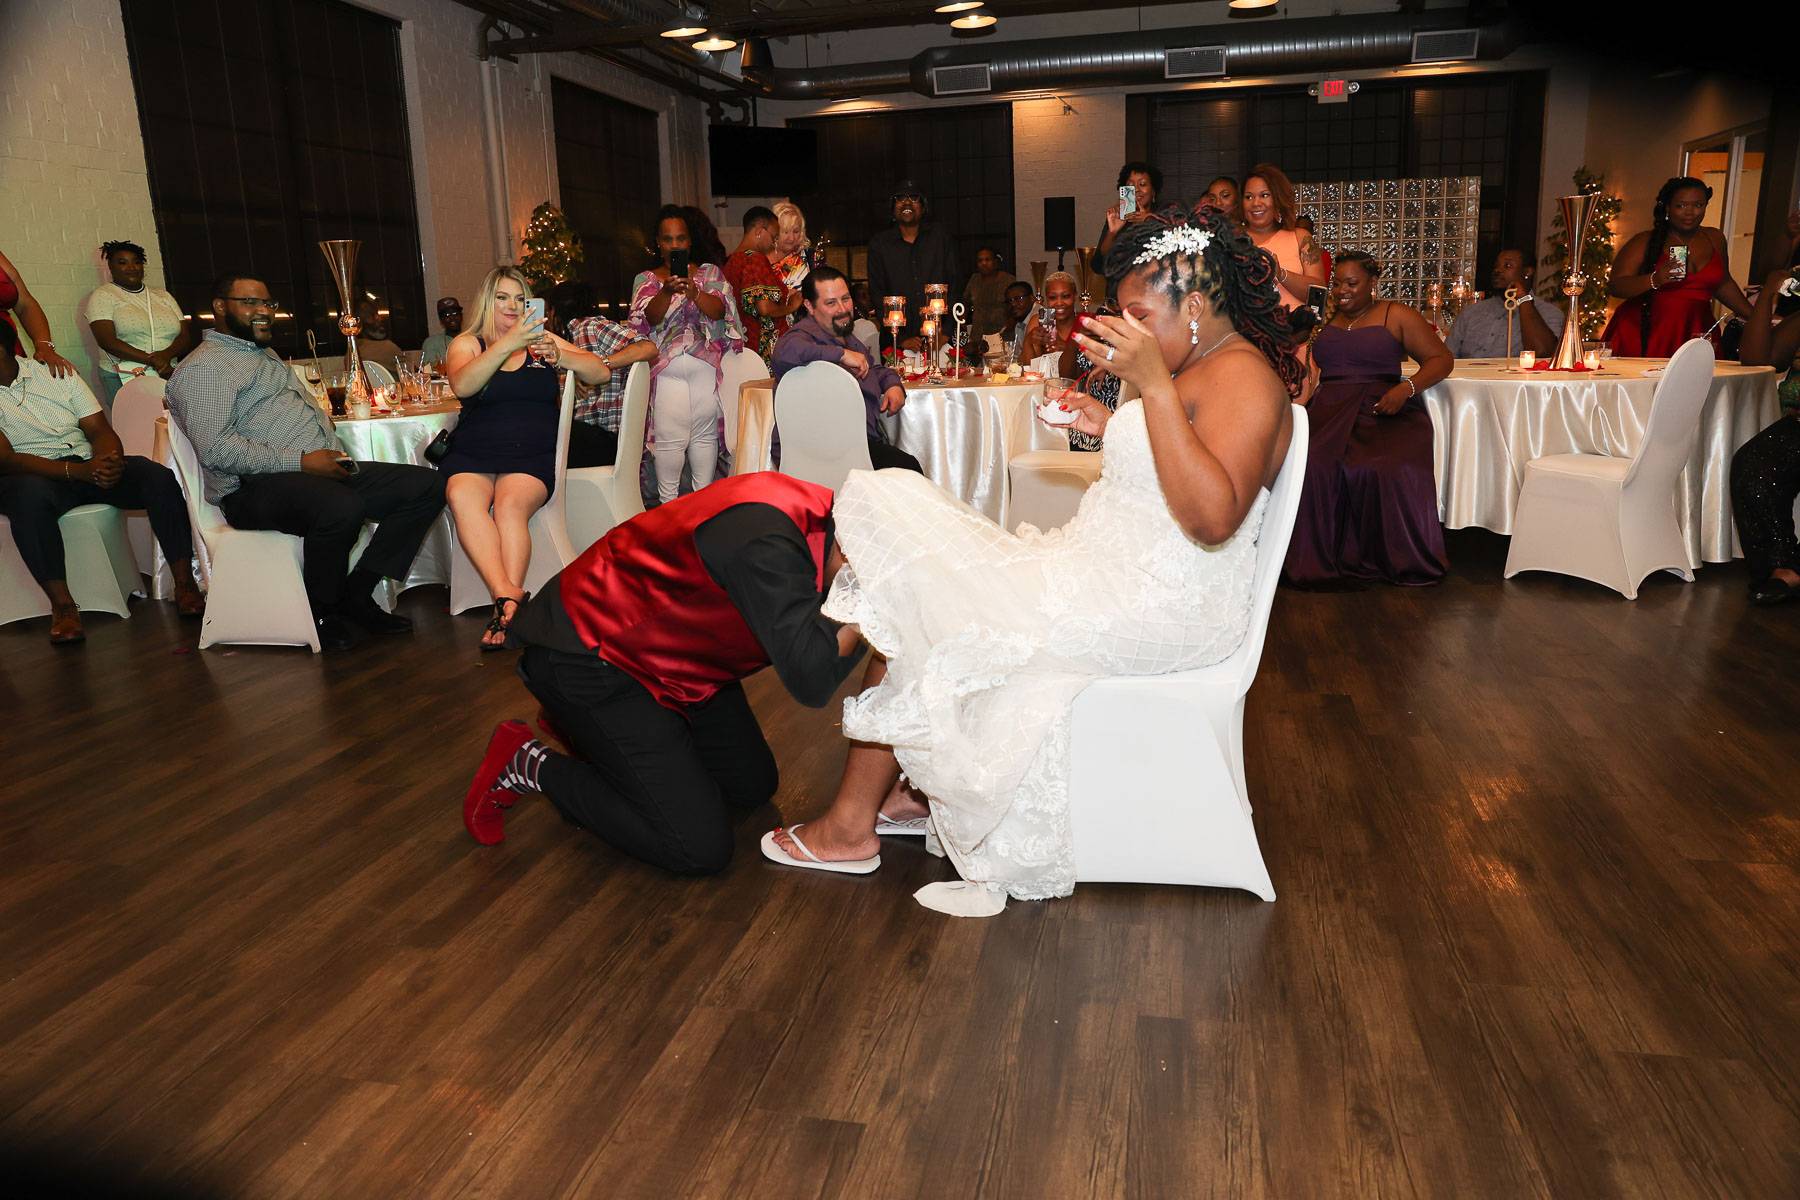 The groom looking inside the bride’s dress